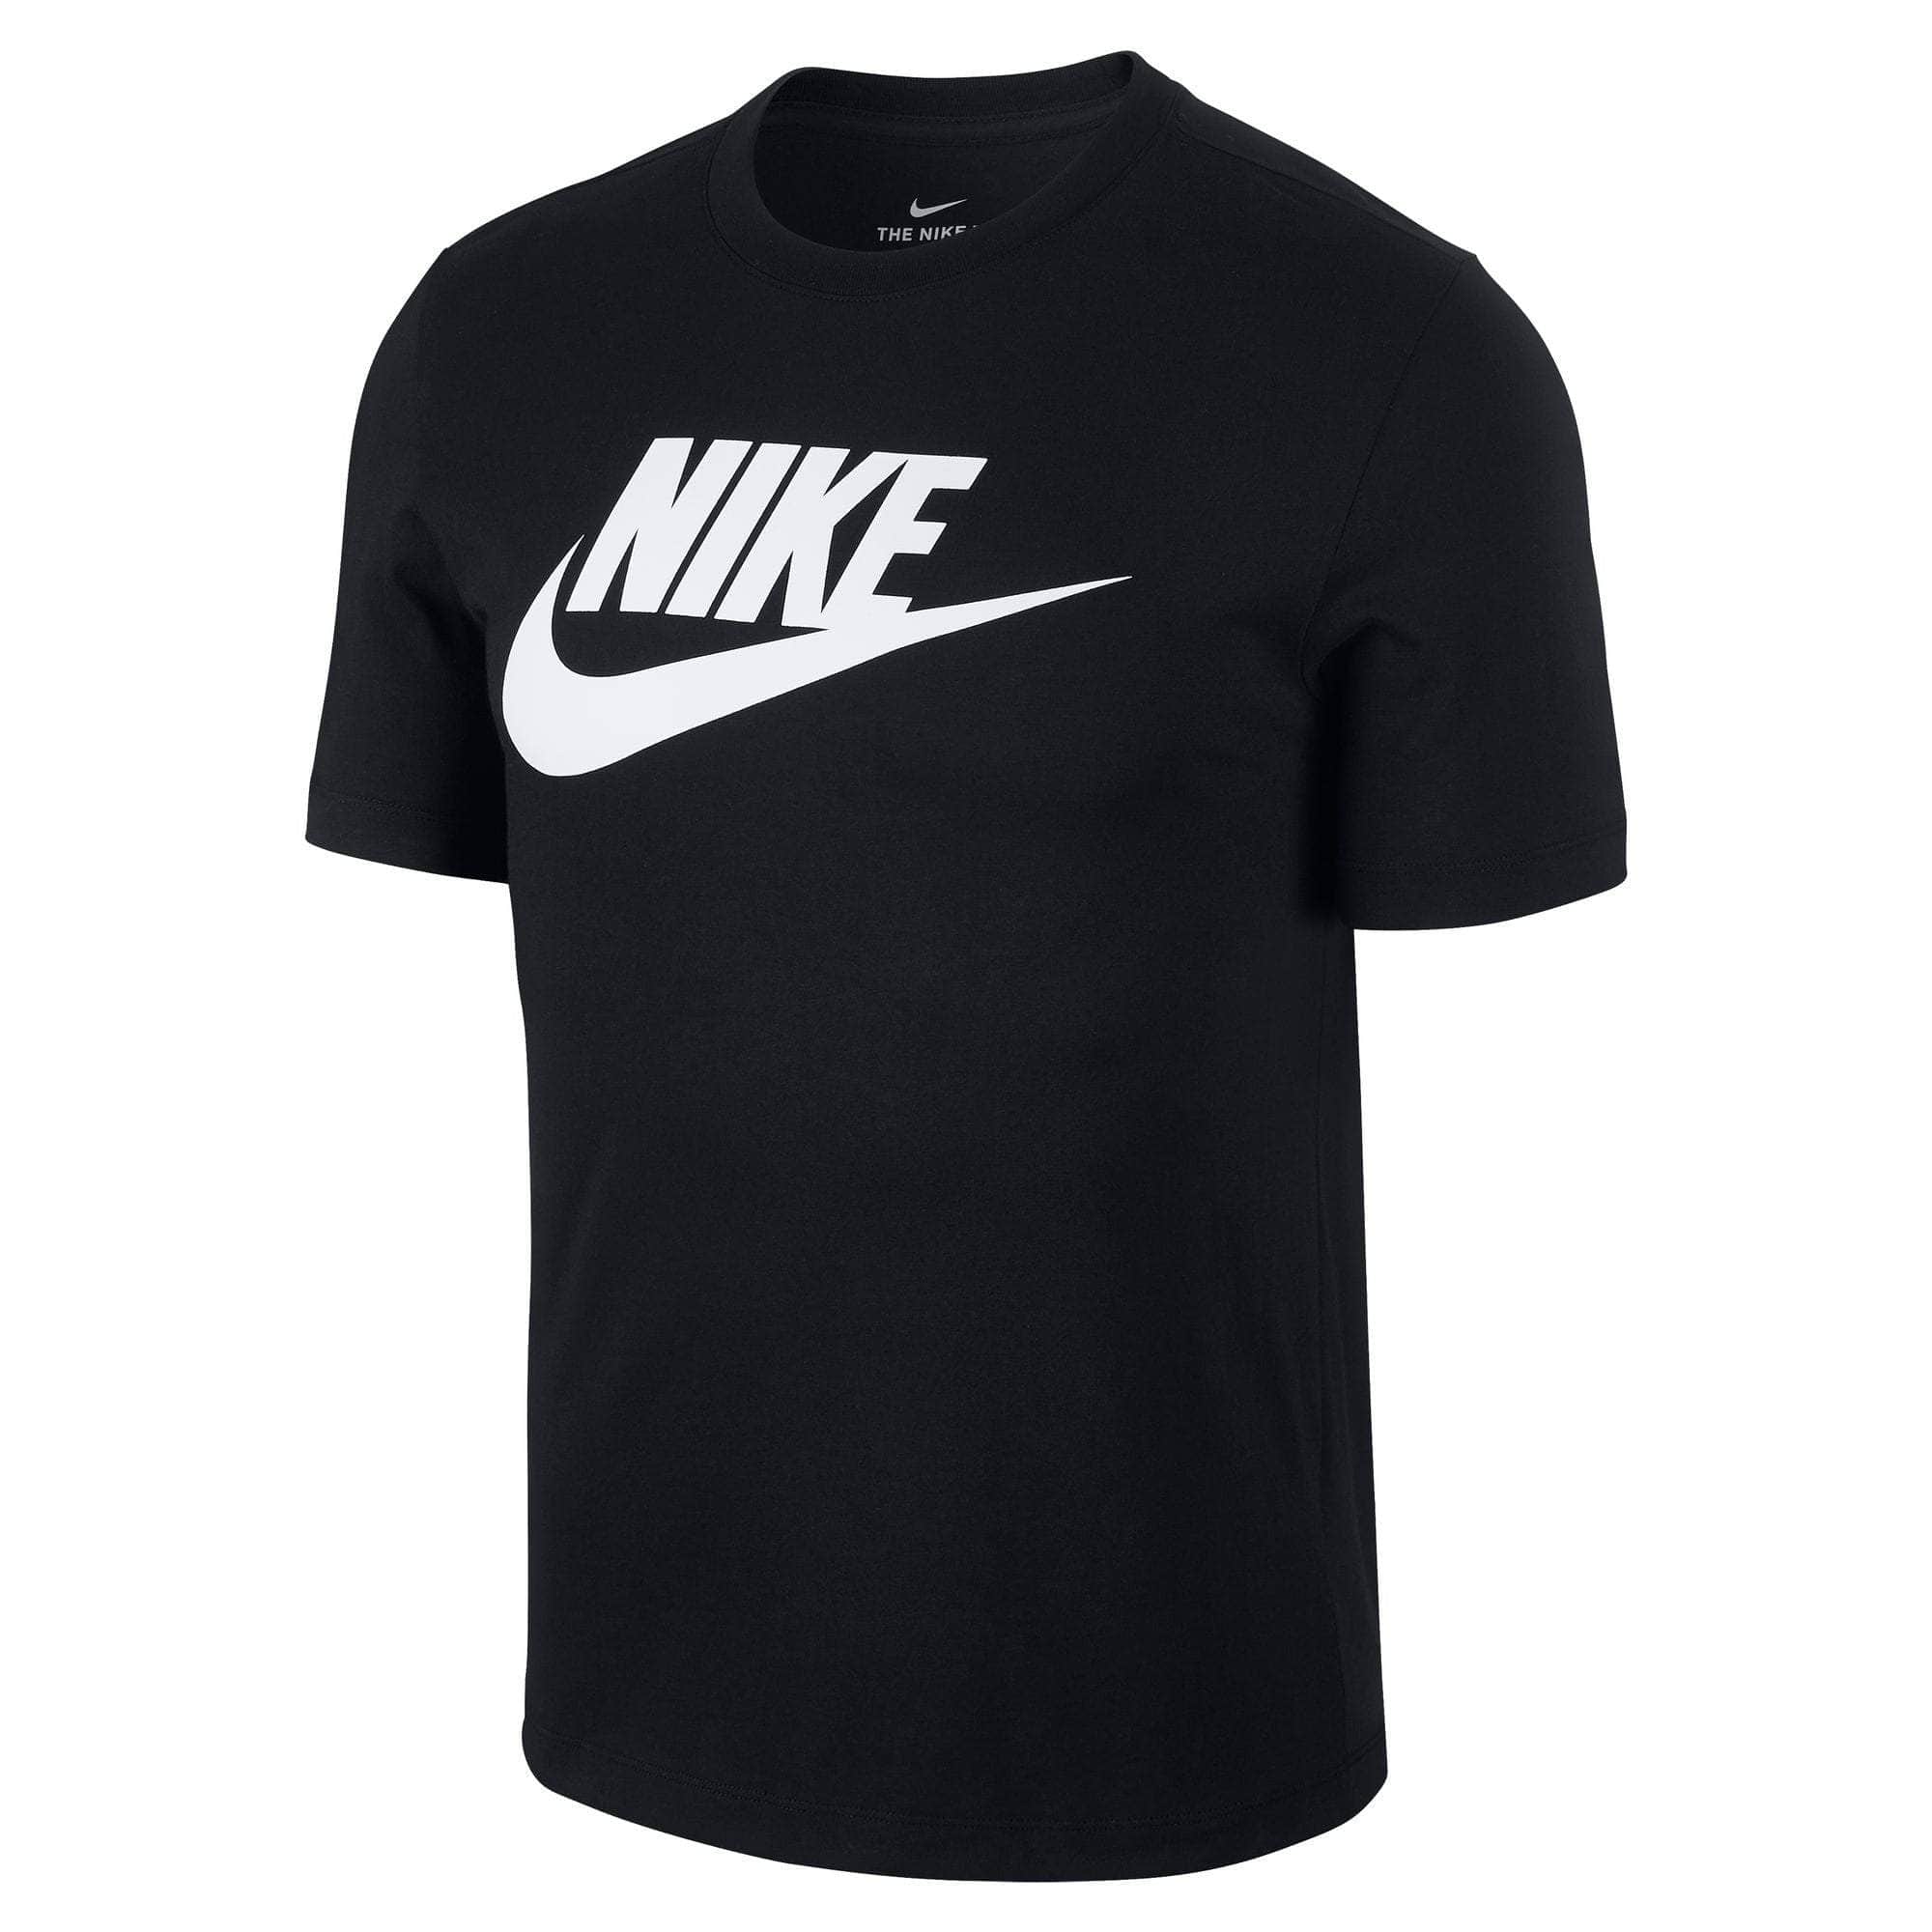 Nike APPAREL Nike Sportswear T-Shirt - Men's